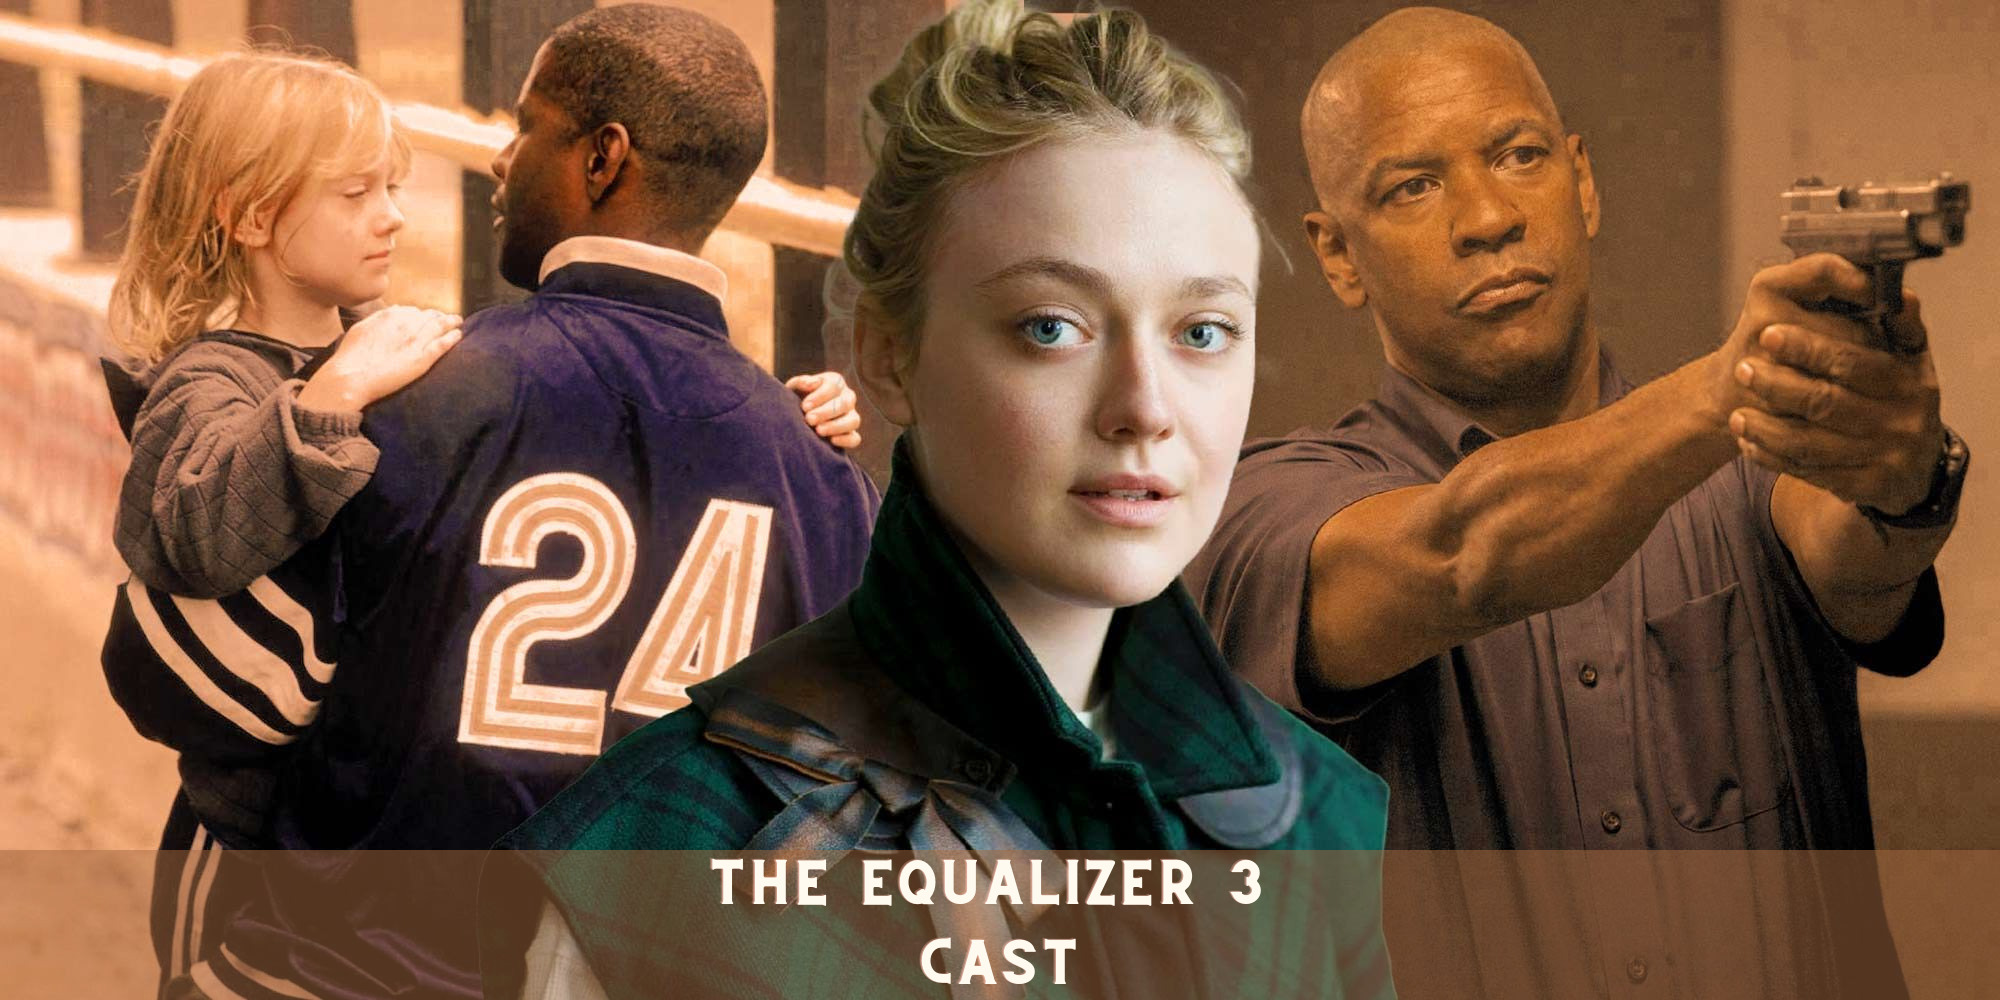 The Equalizer 3 Cast